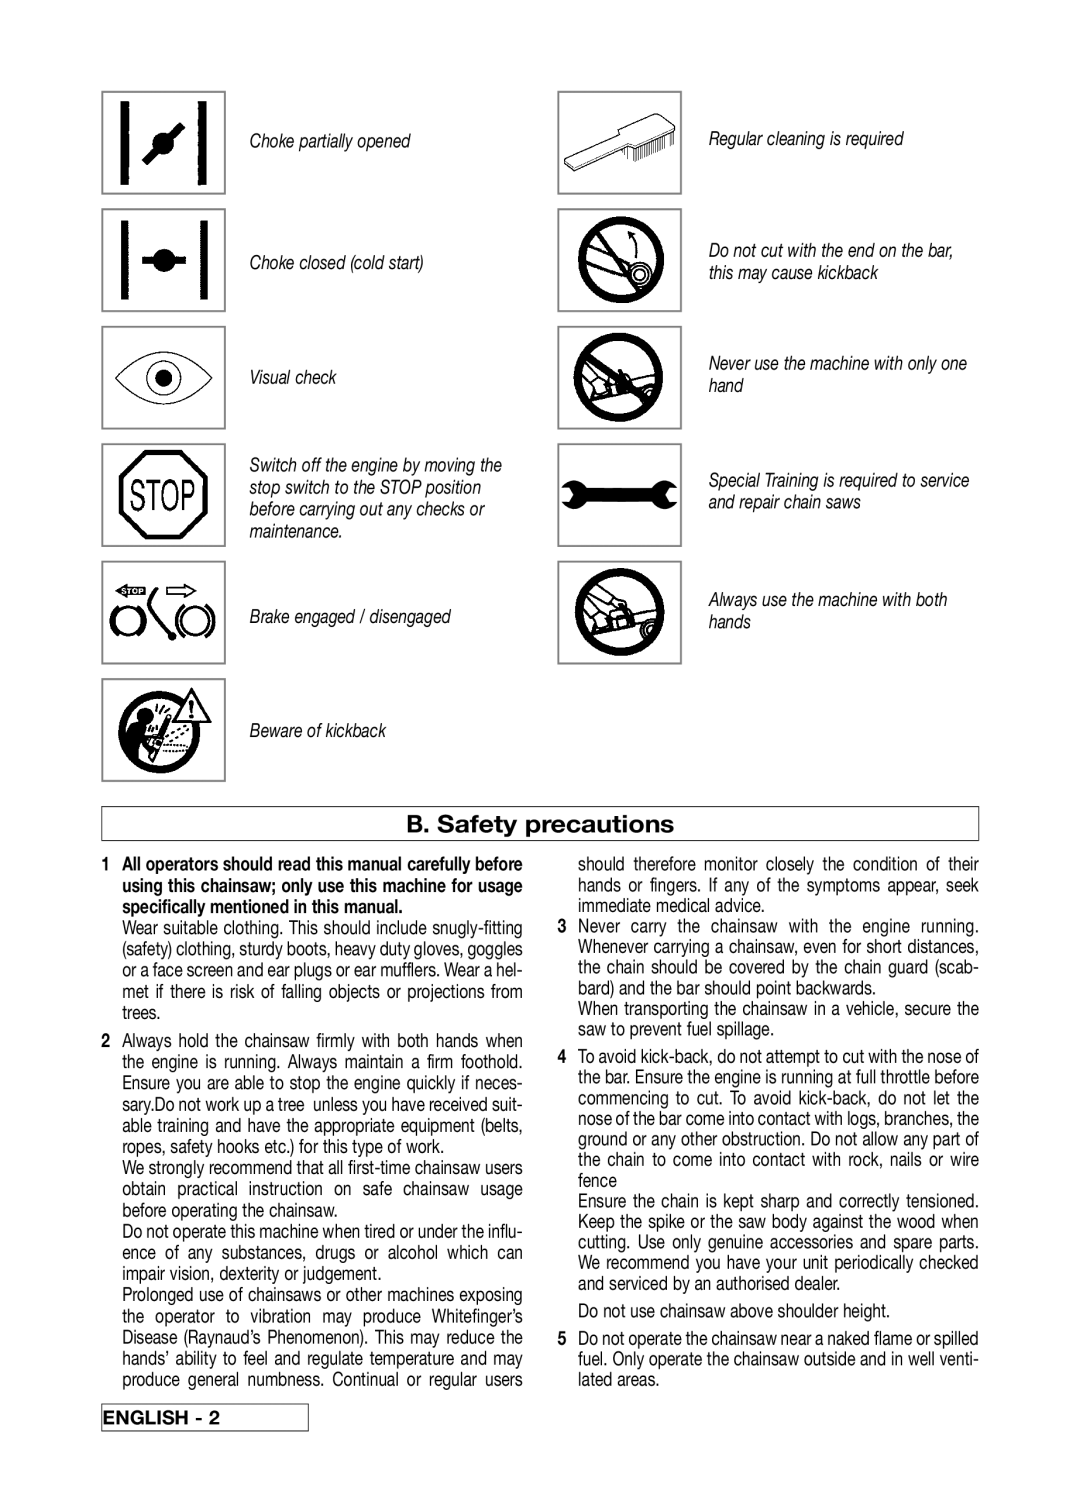 McCulloch 33 manual B. Safety precautions, Choke partially opened Choke closed cold start Visual check, English 